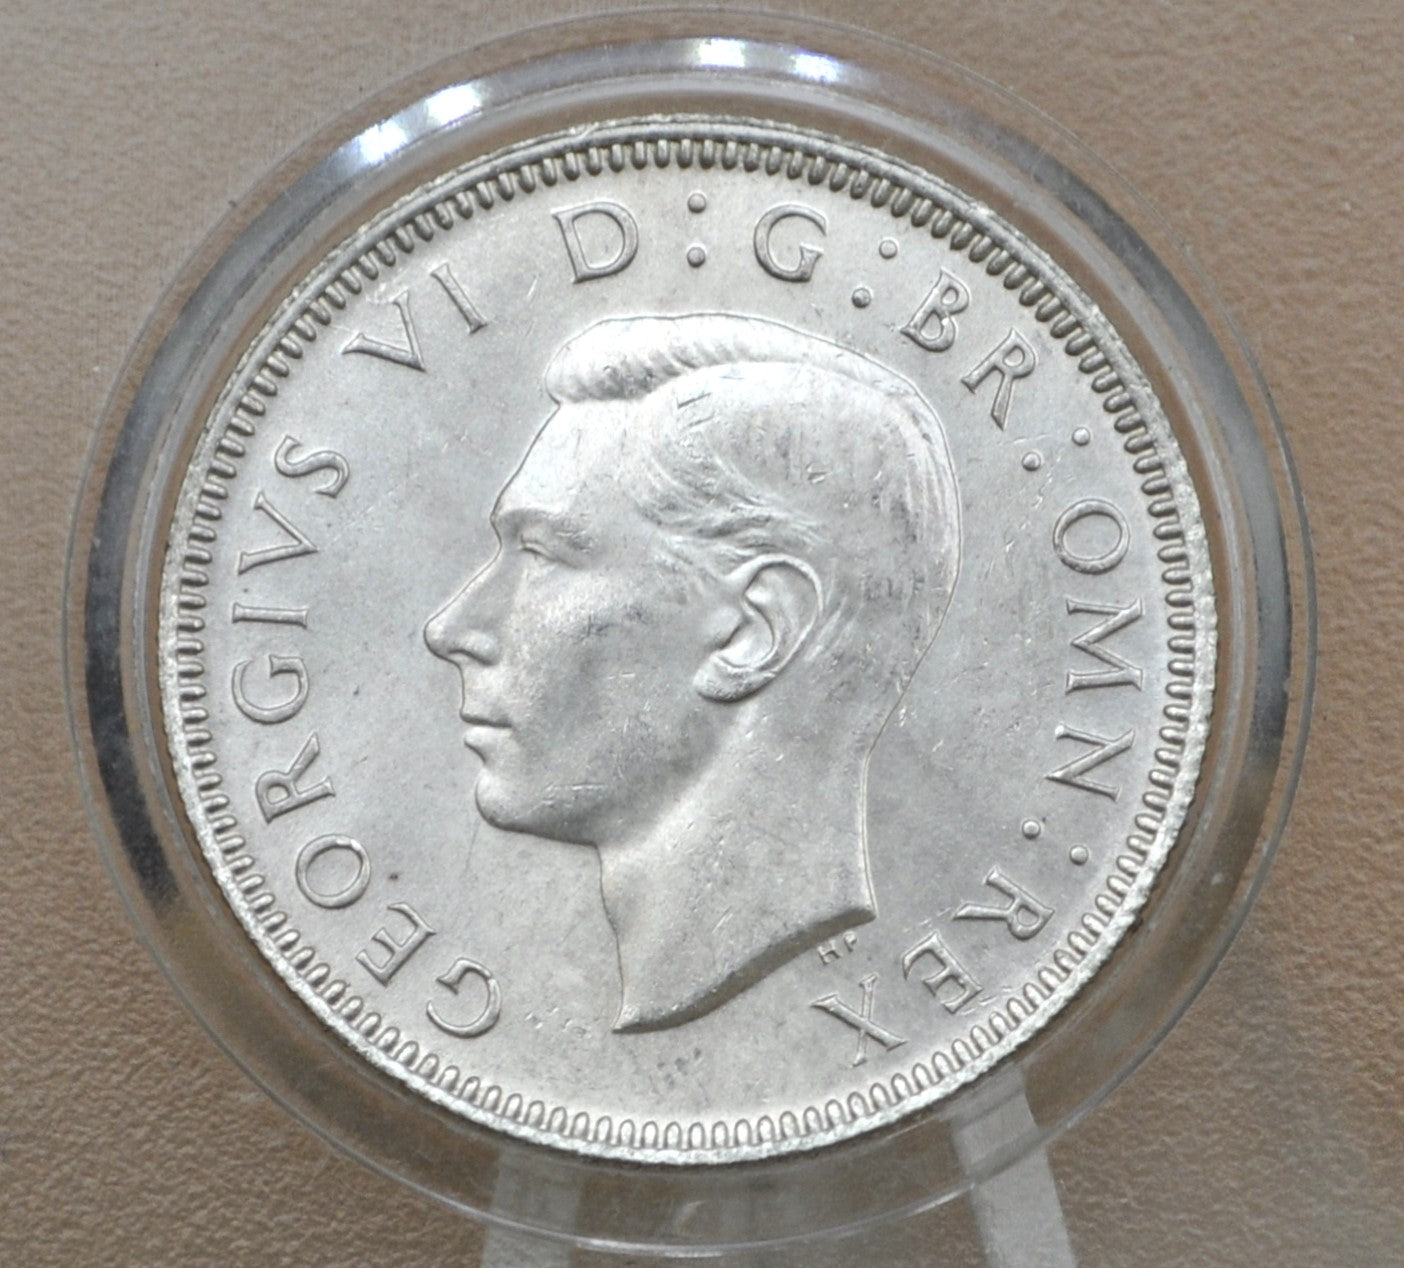 1945 Scottish Crest Silver Shilling UK 1945 One Shilling - Gem BU - King George VI - 1 Shilling 1945 Silver Scotland